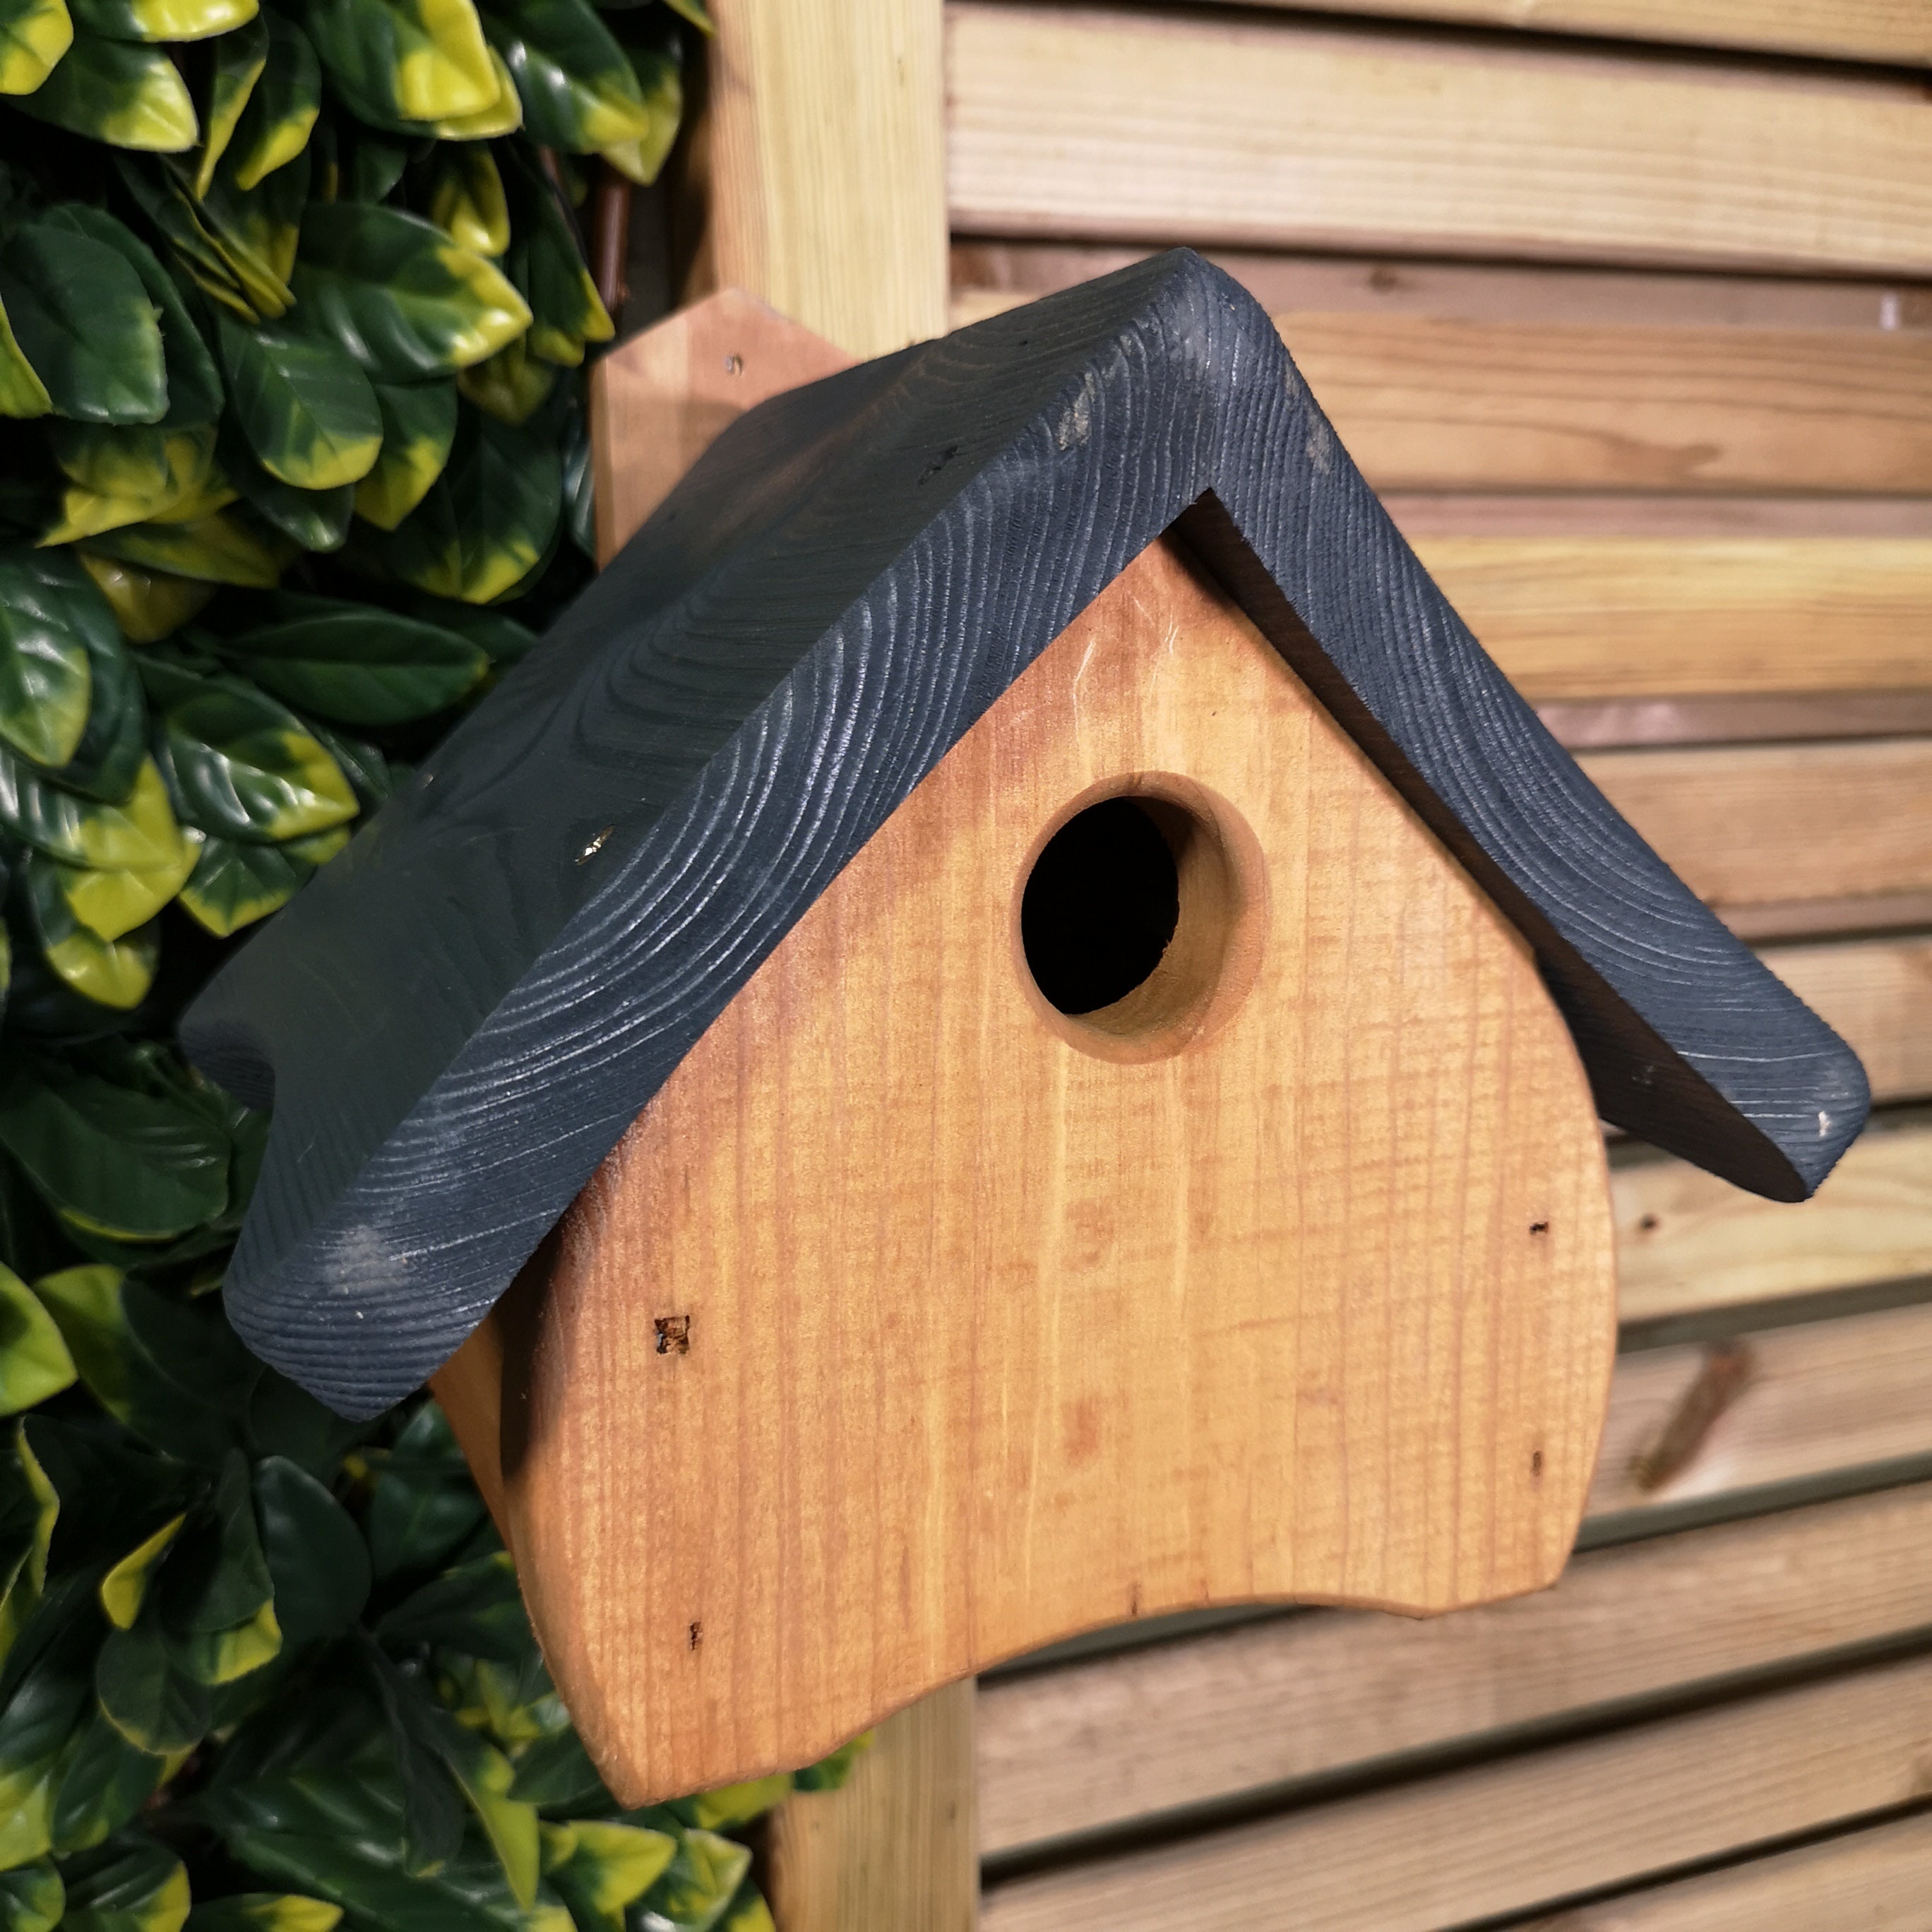 Faraway Modern Wooden Garden Wild Bird Nest Box with Grey Roof - 32mm Entrance Hole